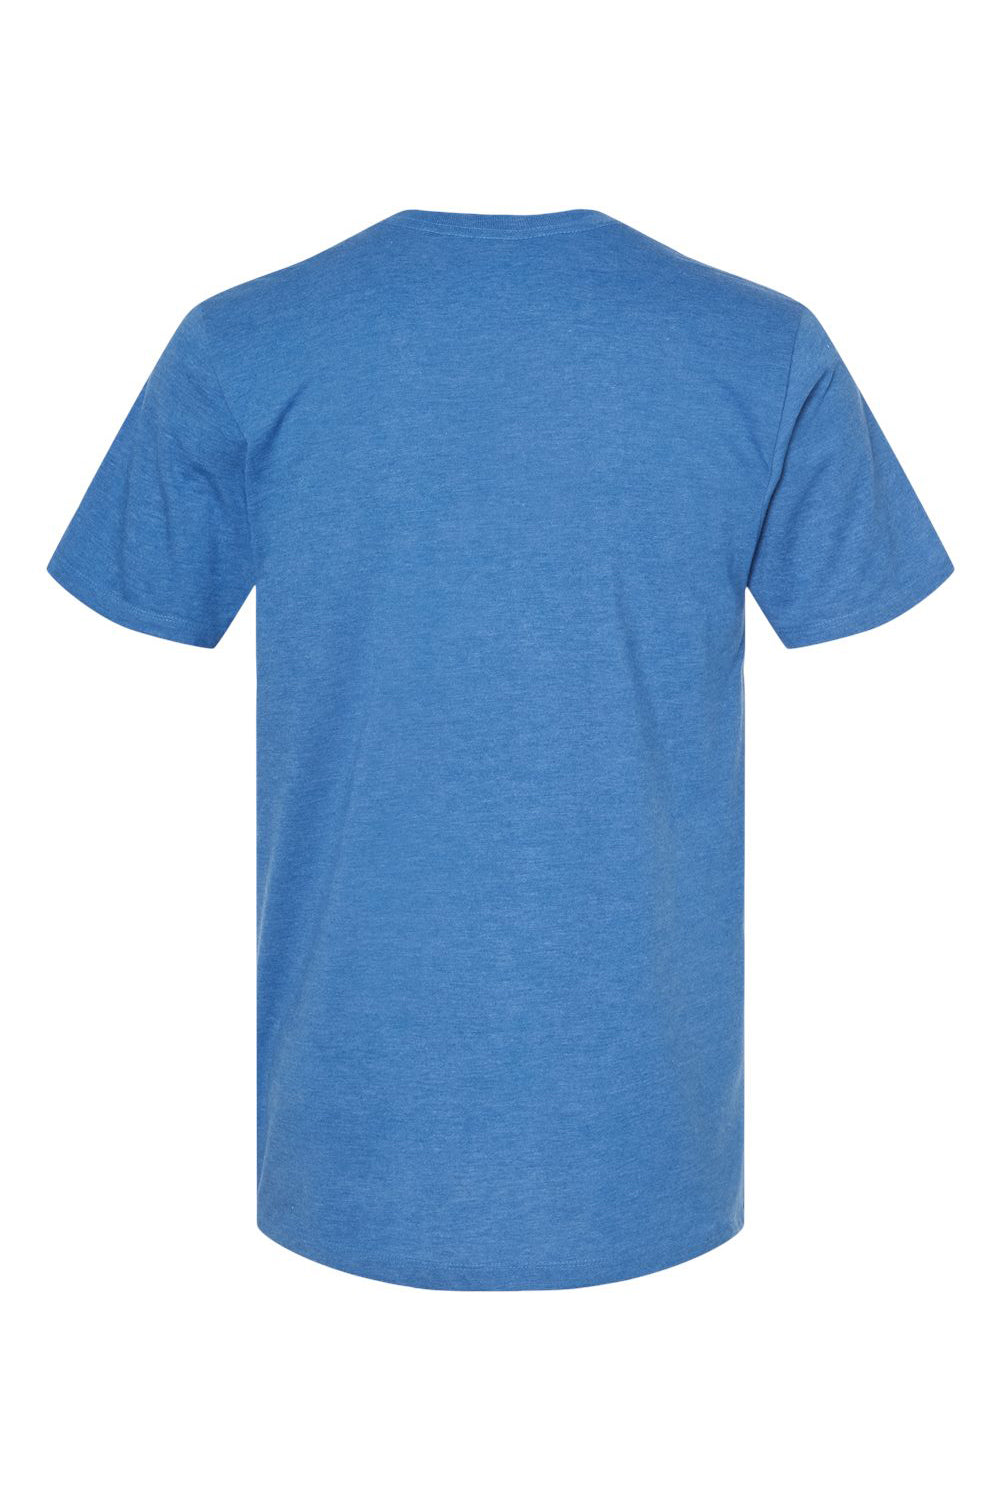 Tultex 541 Mens Premium Short Sleeve Crewneck T-Shirt Heather Royal Blue Flat Back